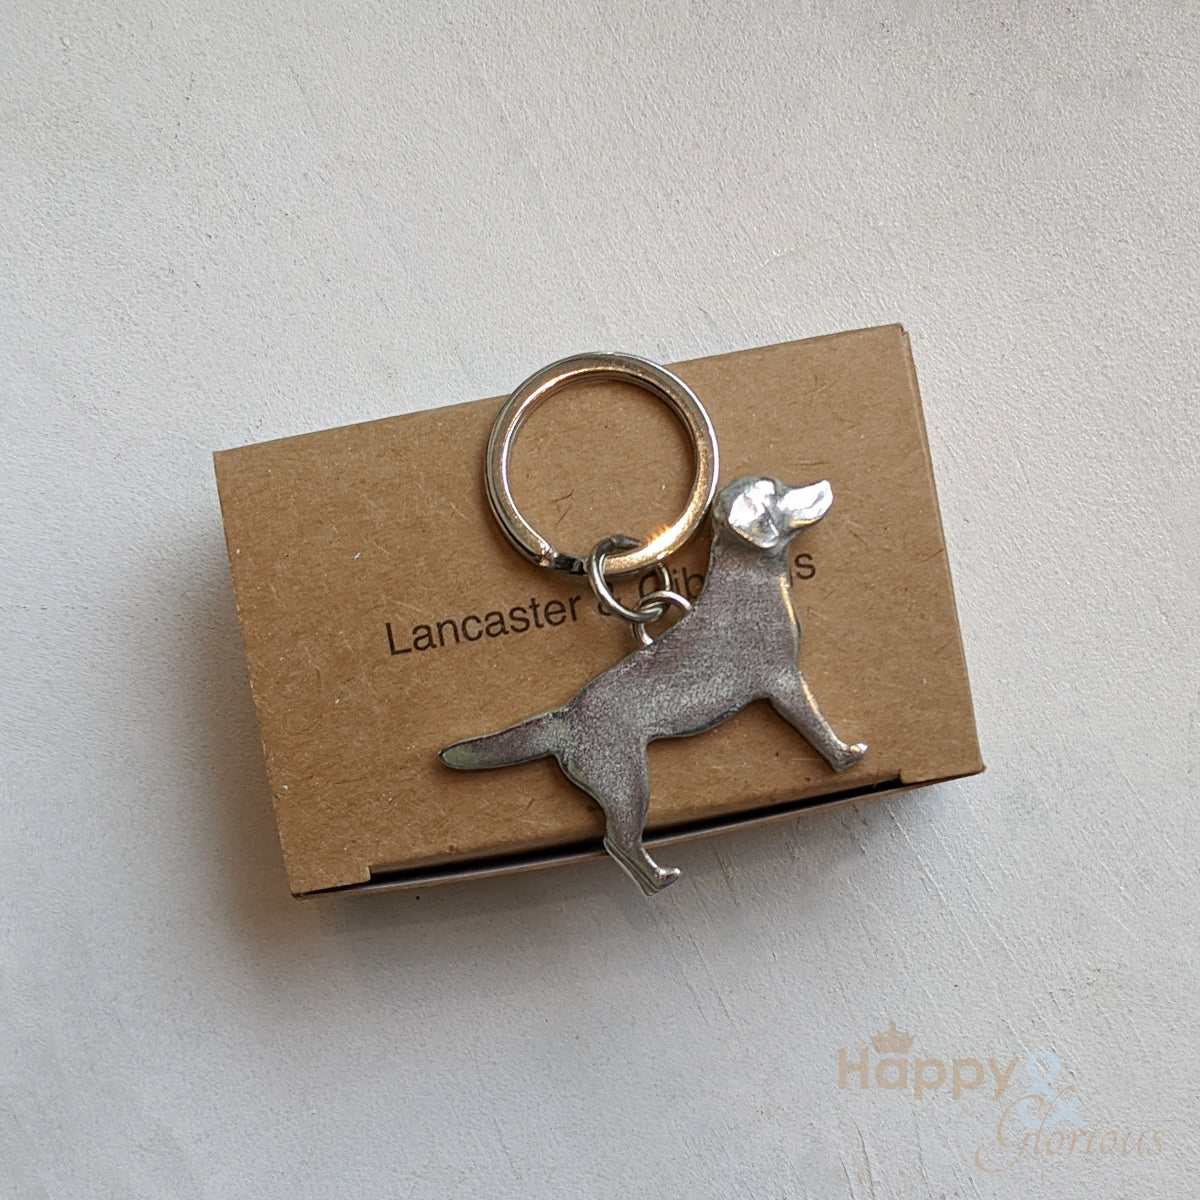 Pewter labrador keyring - handmade by Lancaster & Gibbings